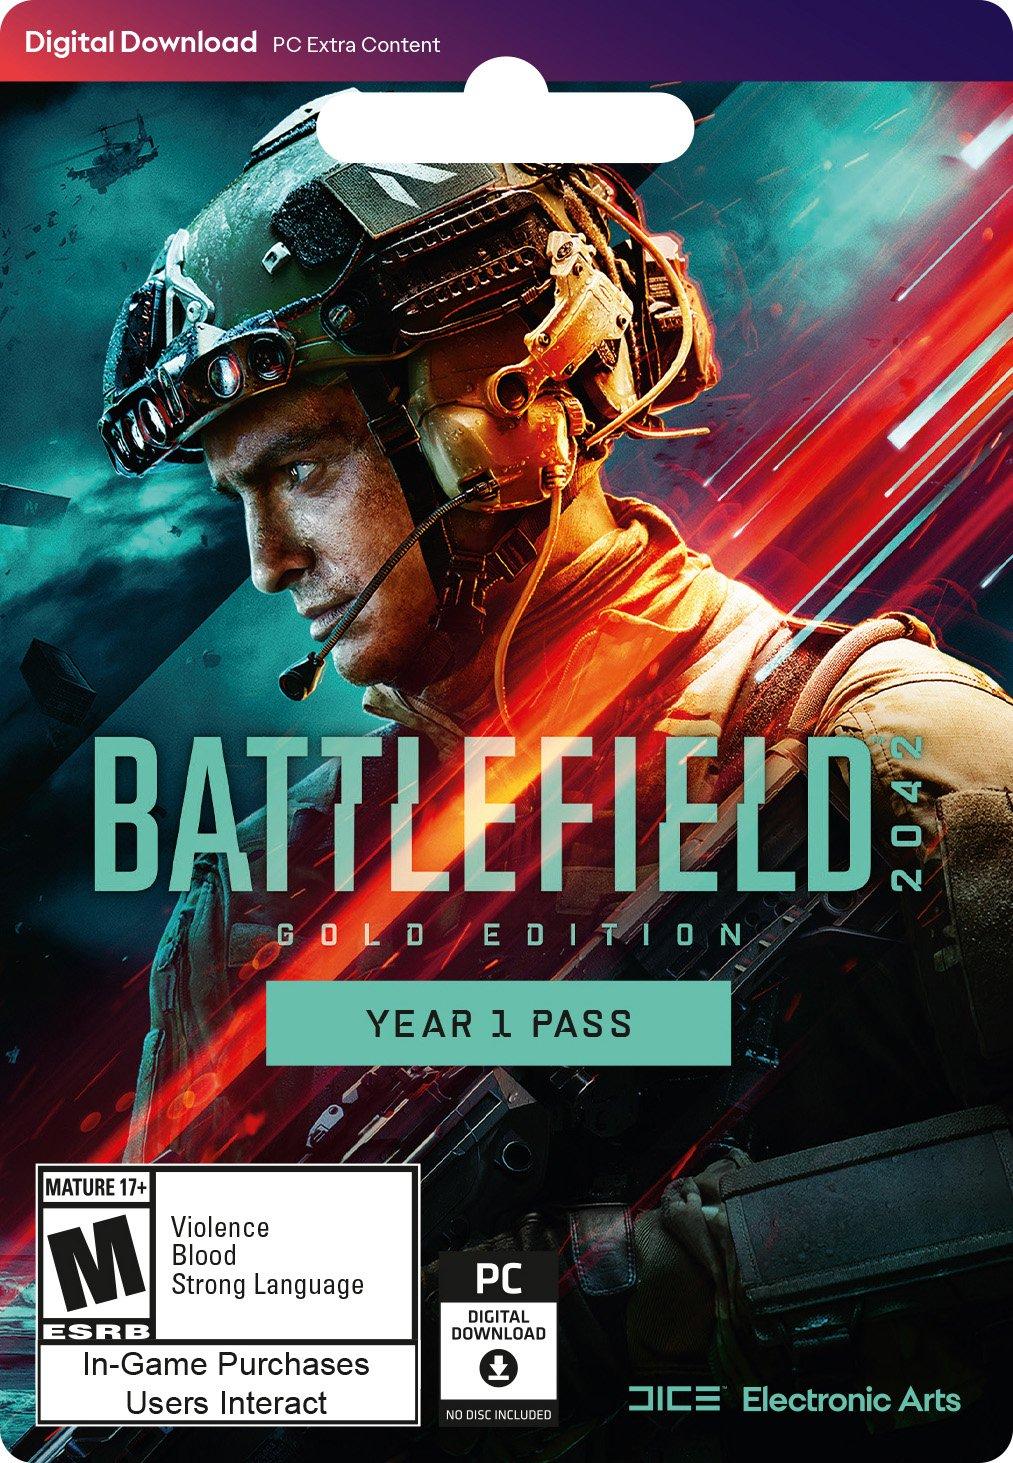 Electronic Arts Battlefield 2042 Year 1 Pass Gold Edition - PC Origin